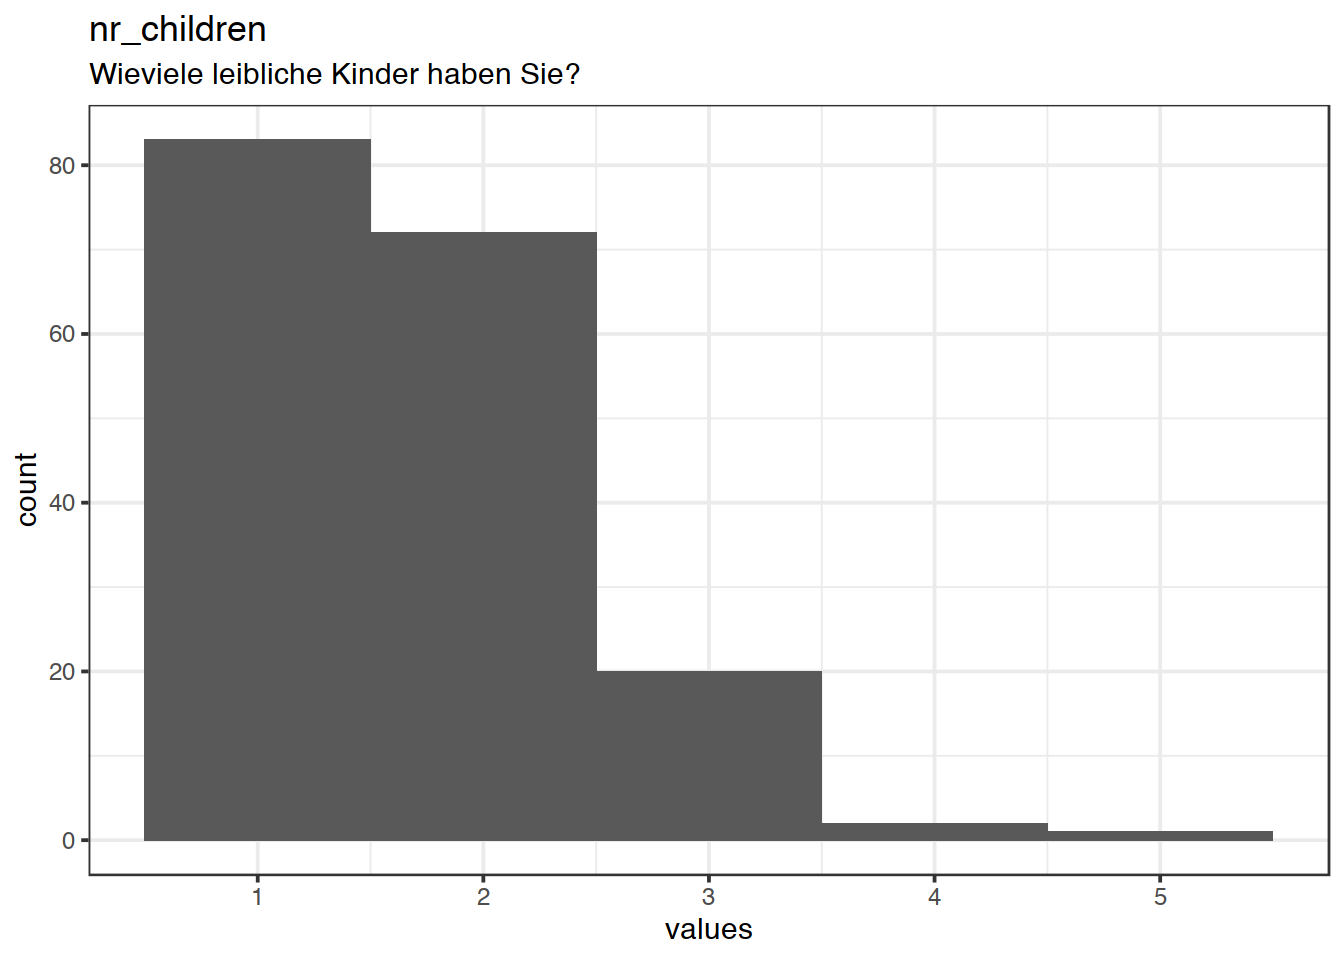 Distribution of values for nr_children